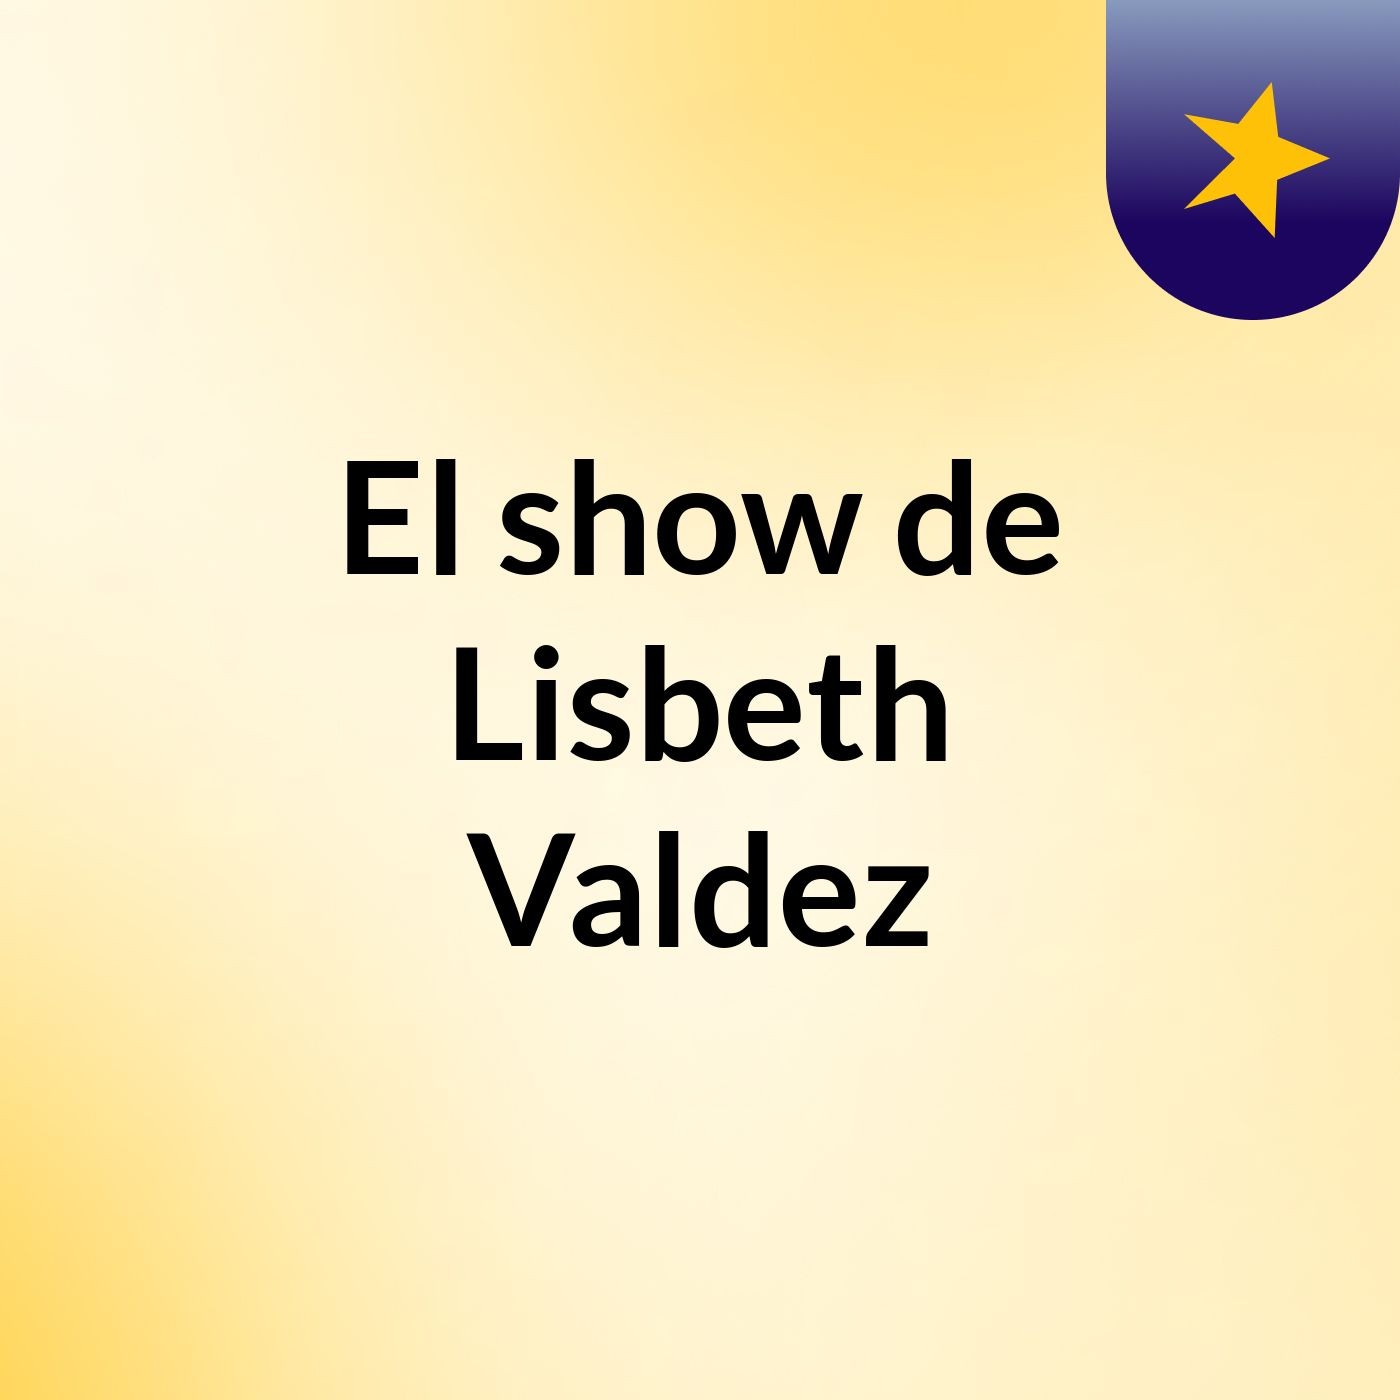 El show de Lisbeth Valdez